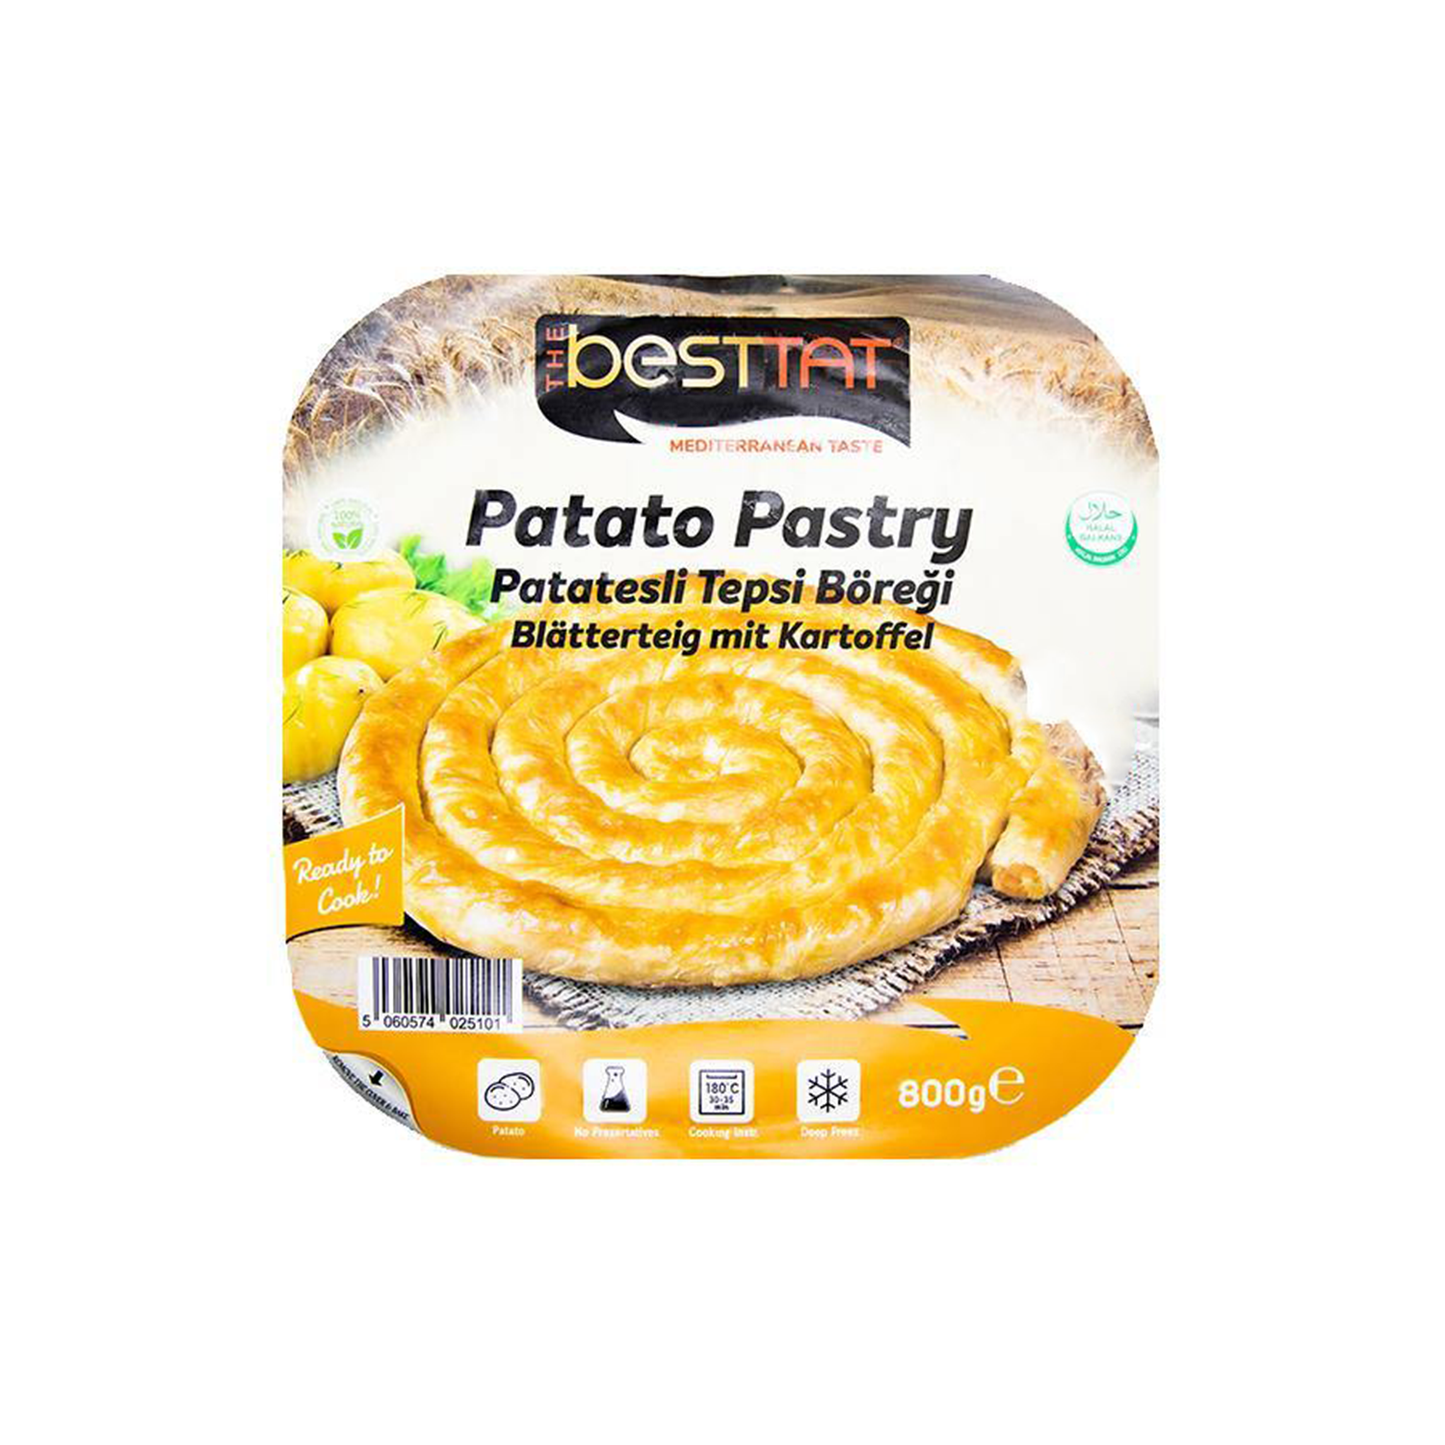 Besttat Potato Pastry 800g